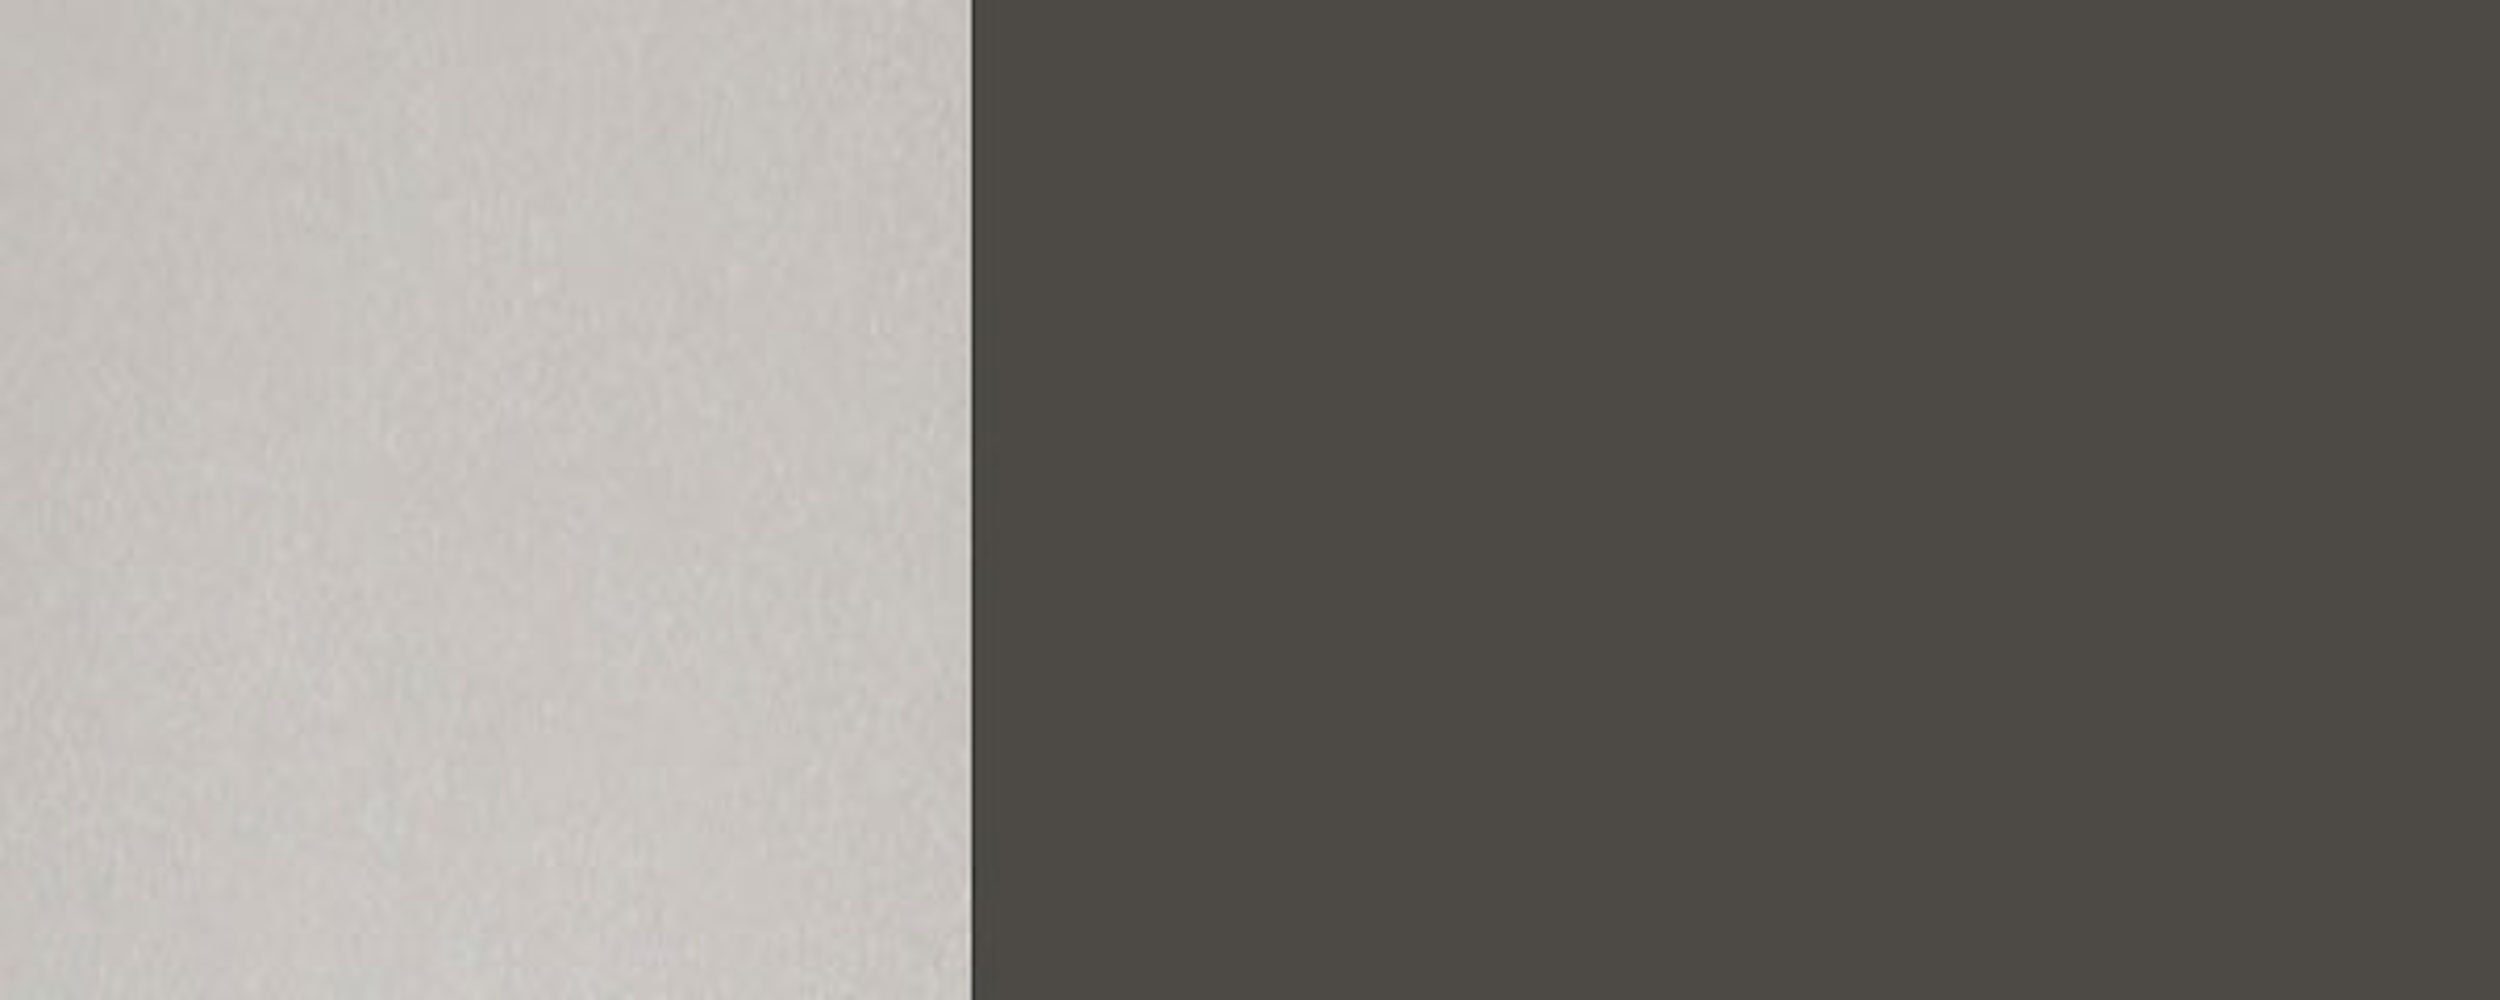 7022 Tivoli Klapphängeschrank Korpusfarbe 40cm mit 1-türig umbragrau Front- und matt RAL wählbar Feldmann-Wohnen (Tivoli) Glasfront